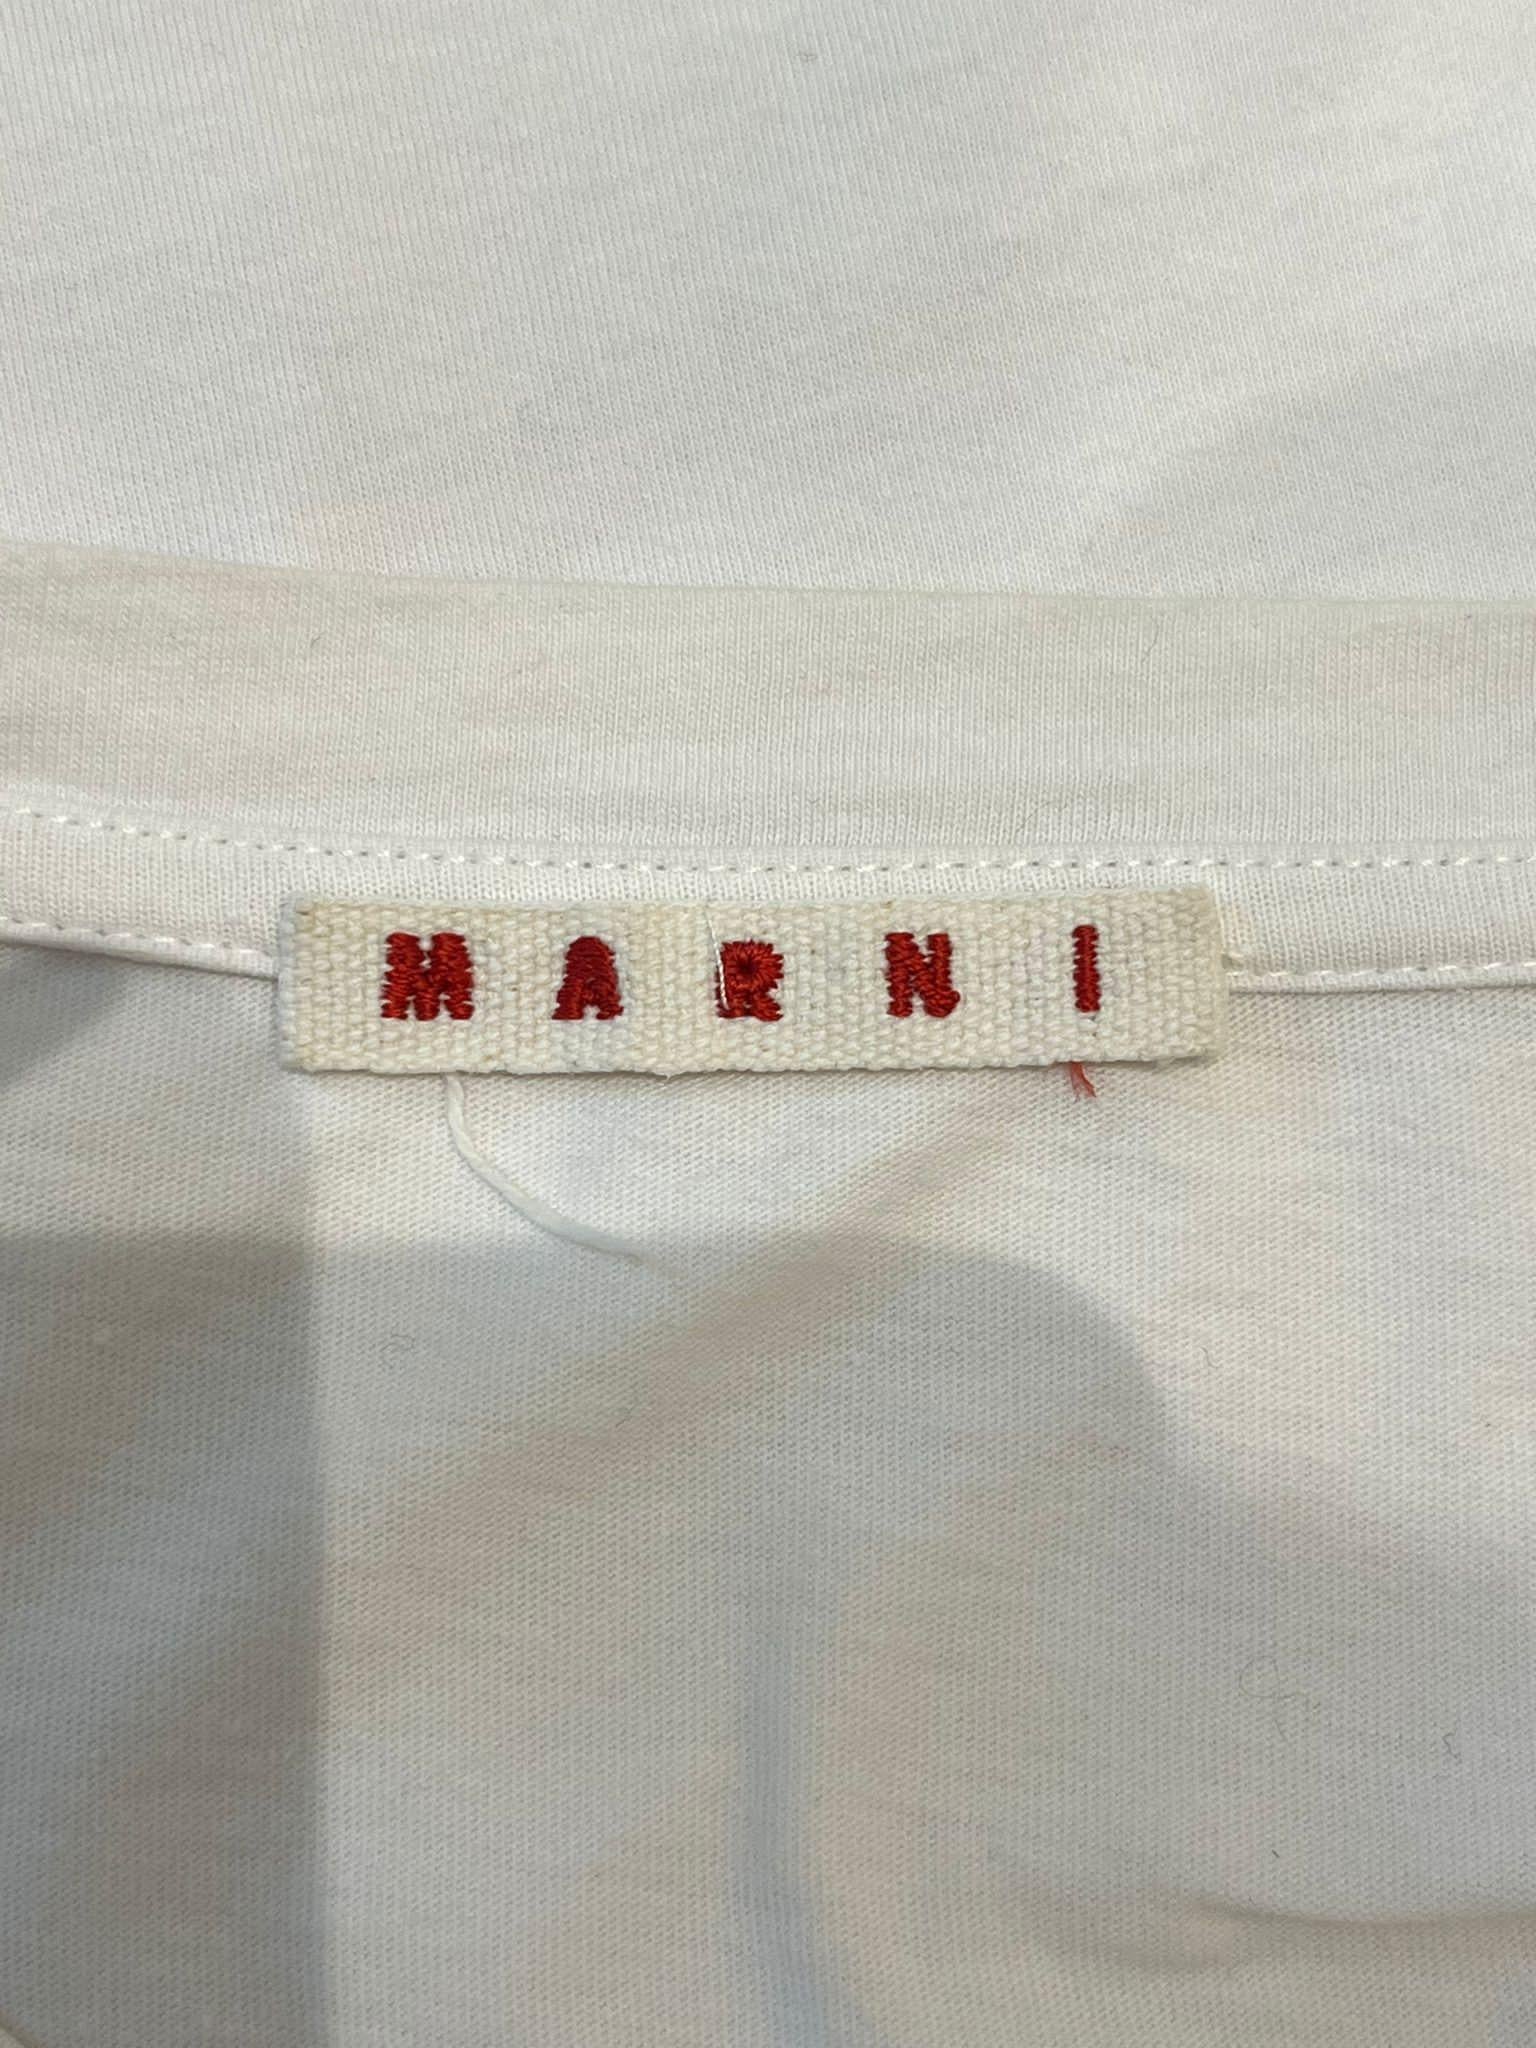 Marni Chain Print Cotton Top For Sale 1